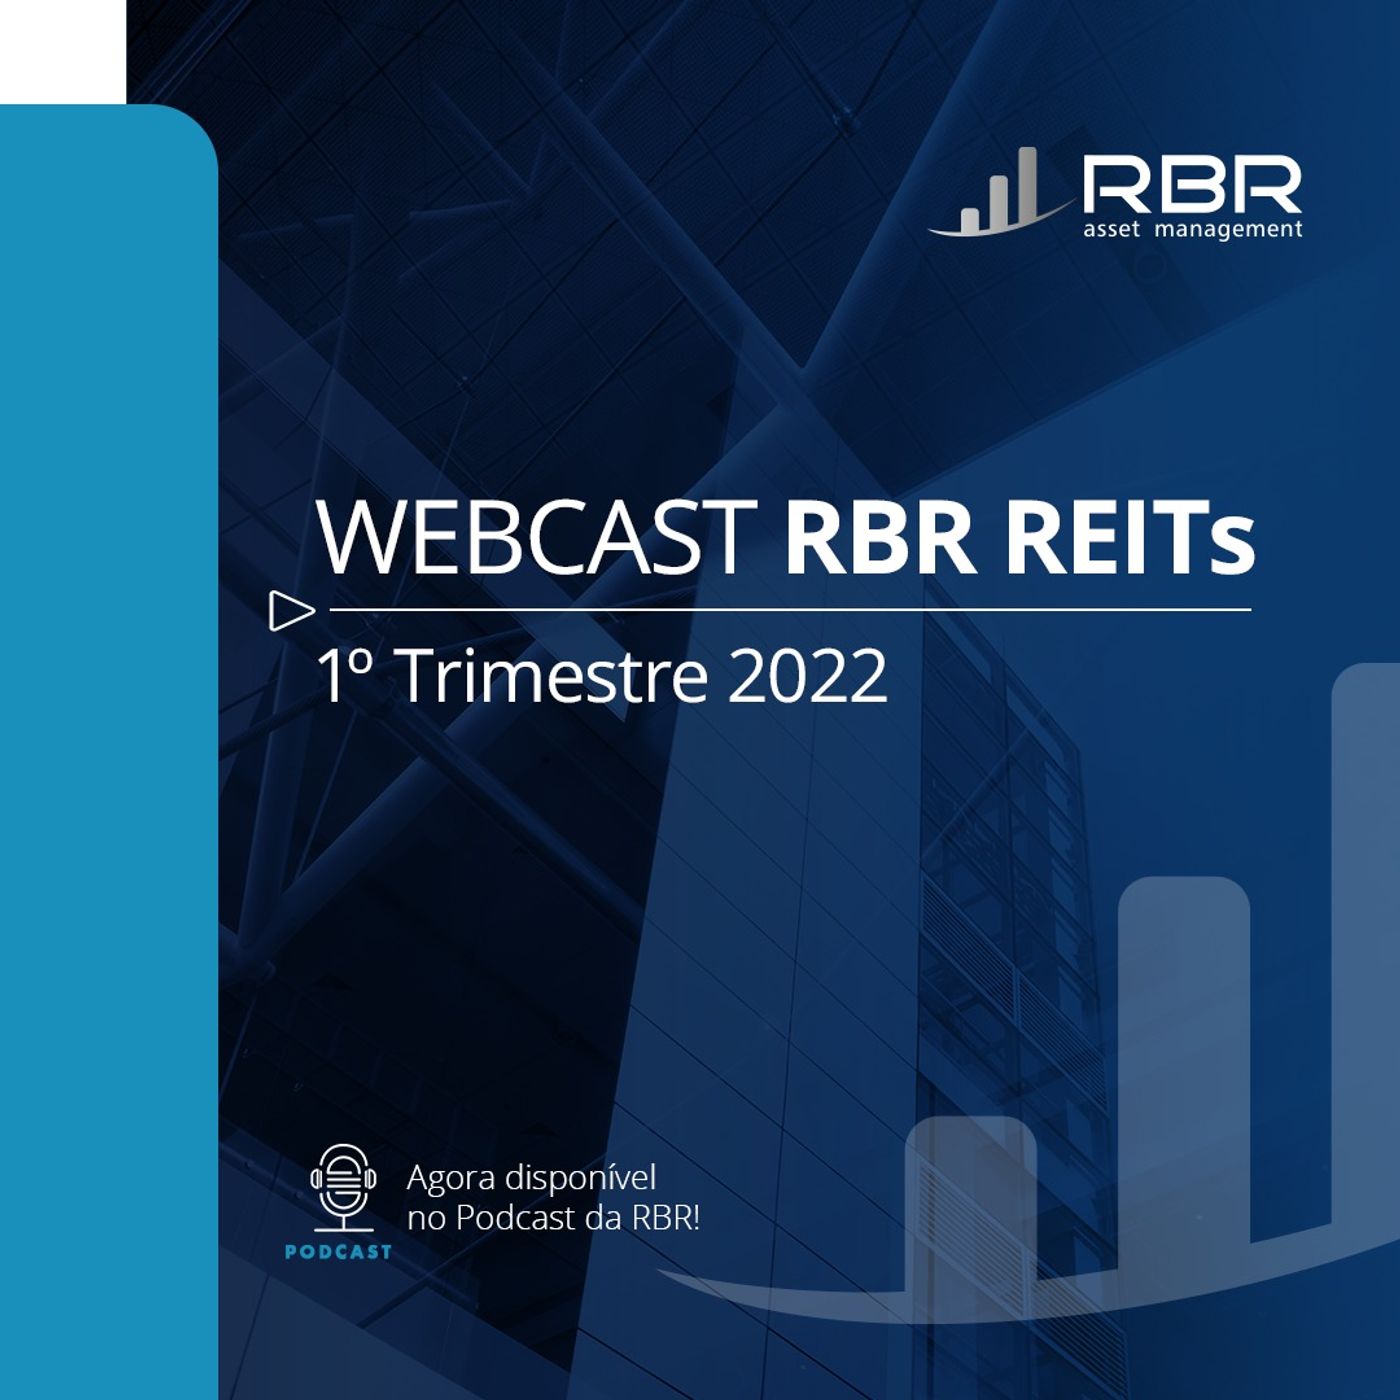 Webcast RBR REITs 1º Trimestre 2022